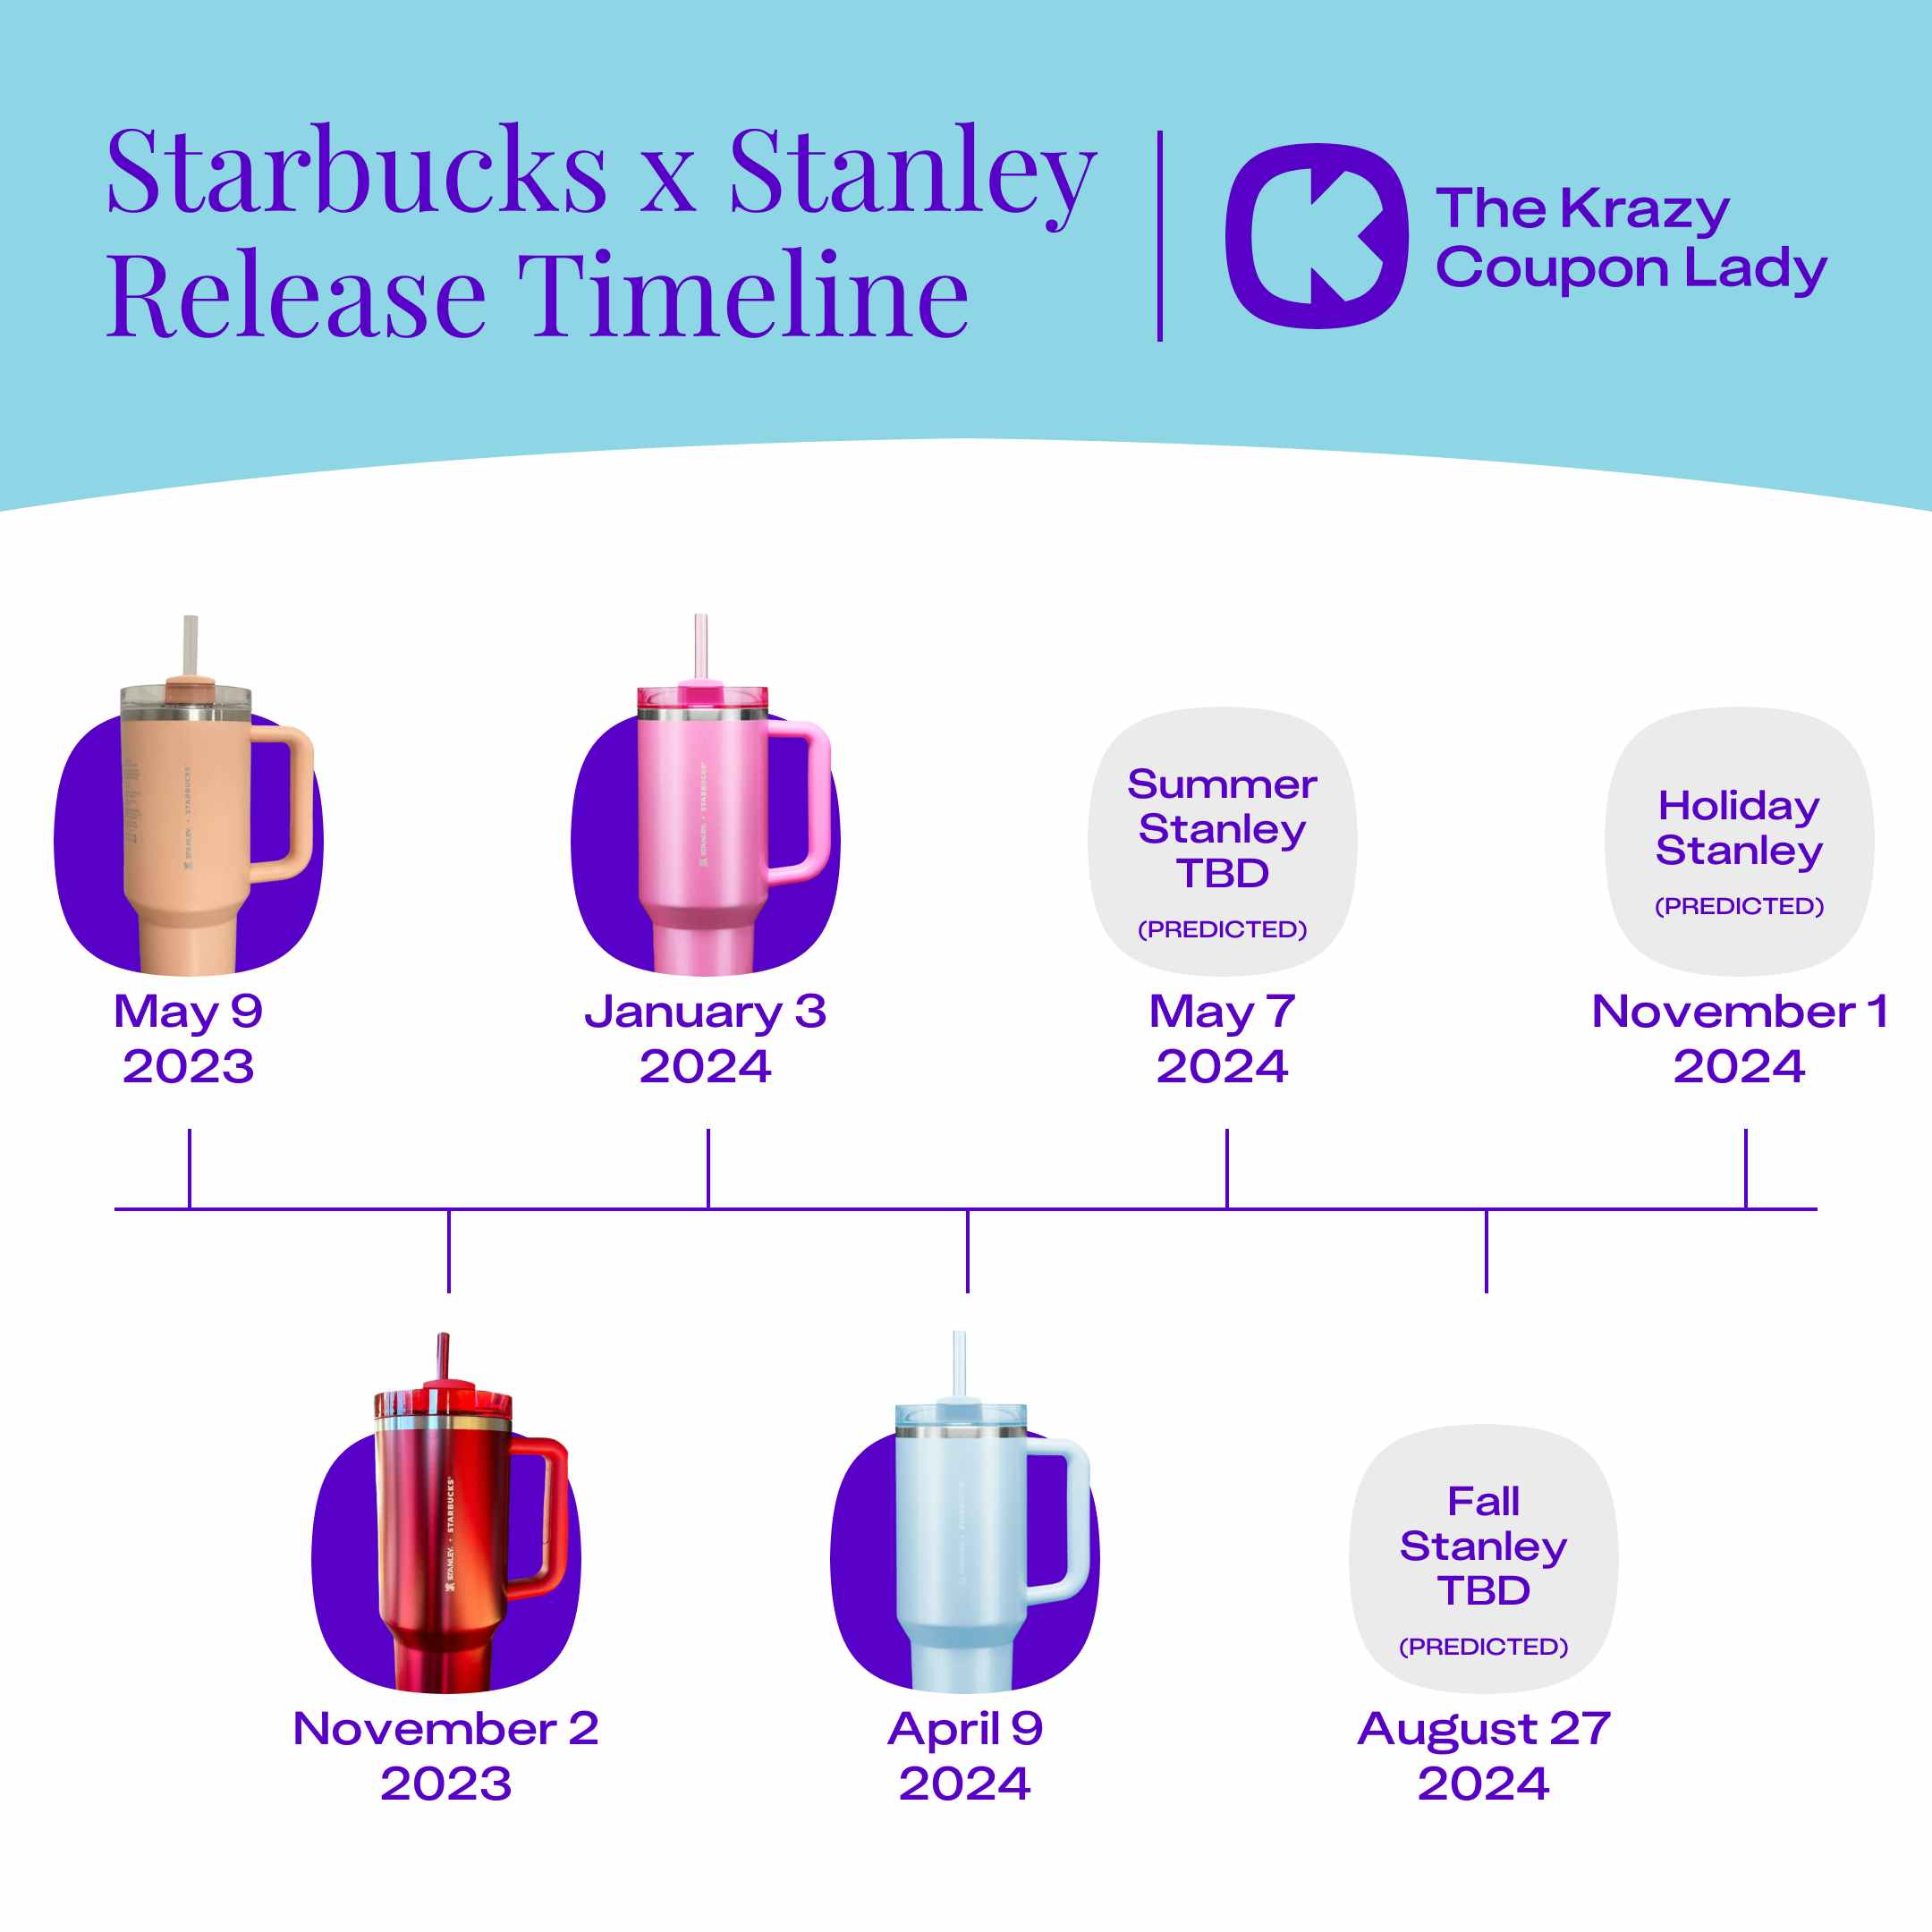 Starbucks x Stanley Release Timeline